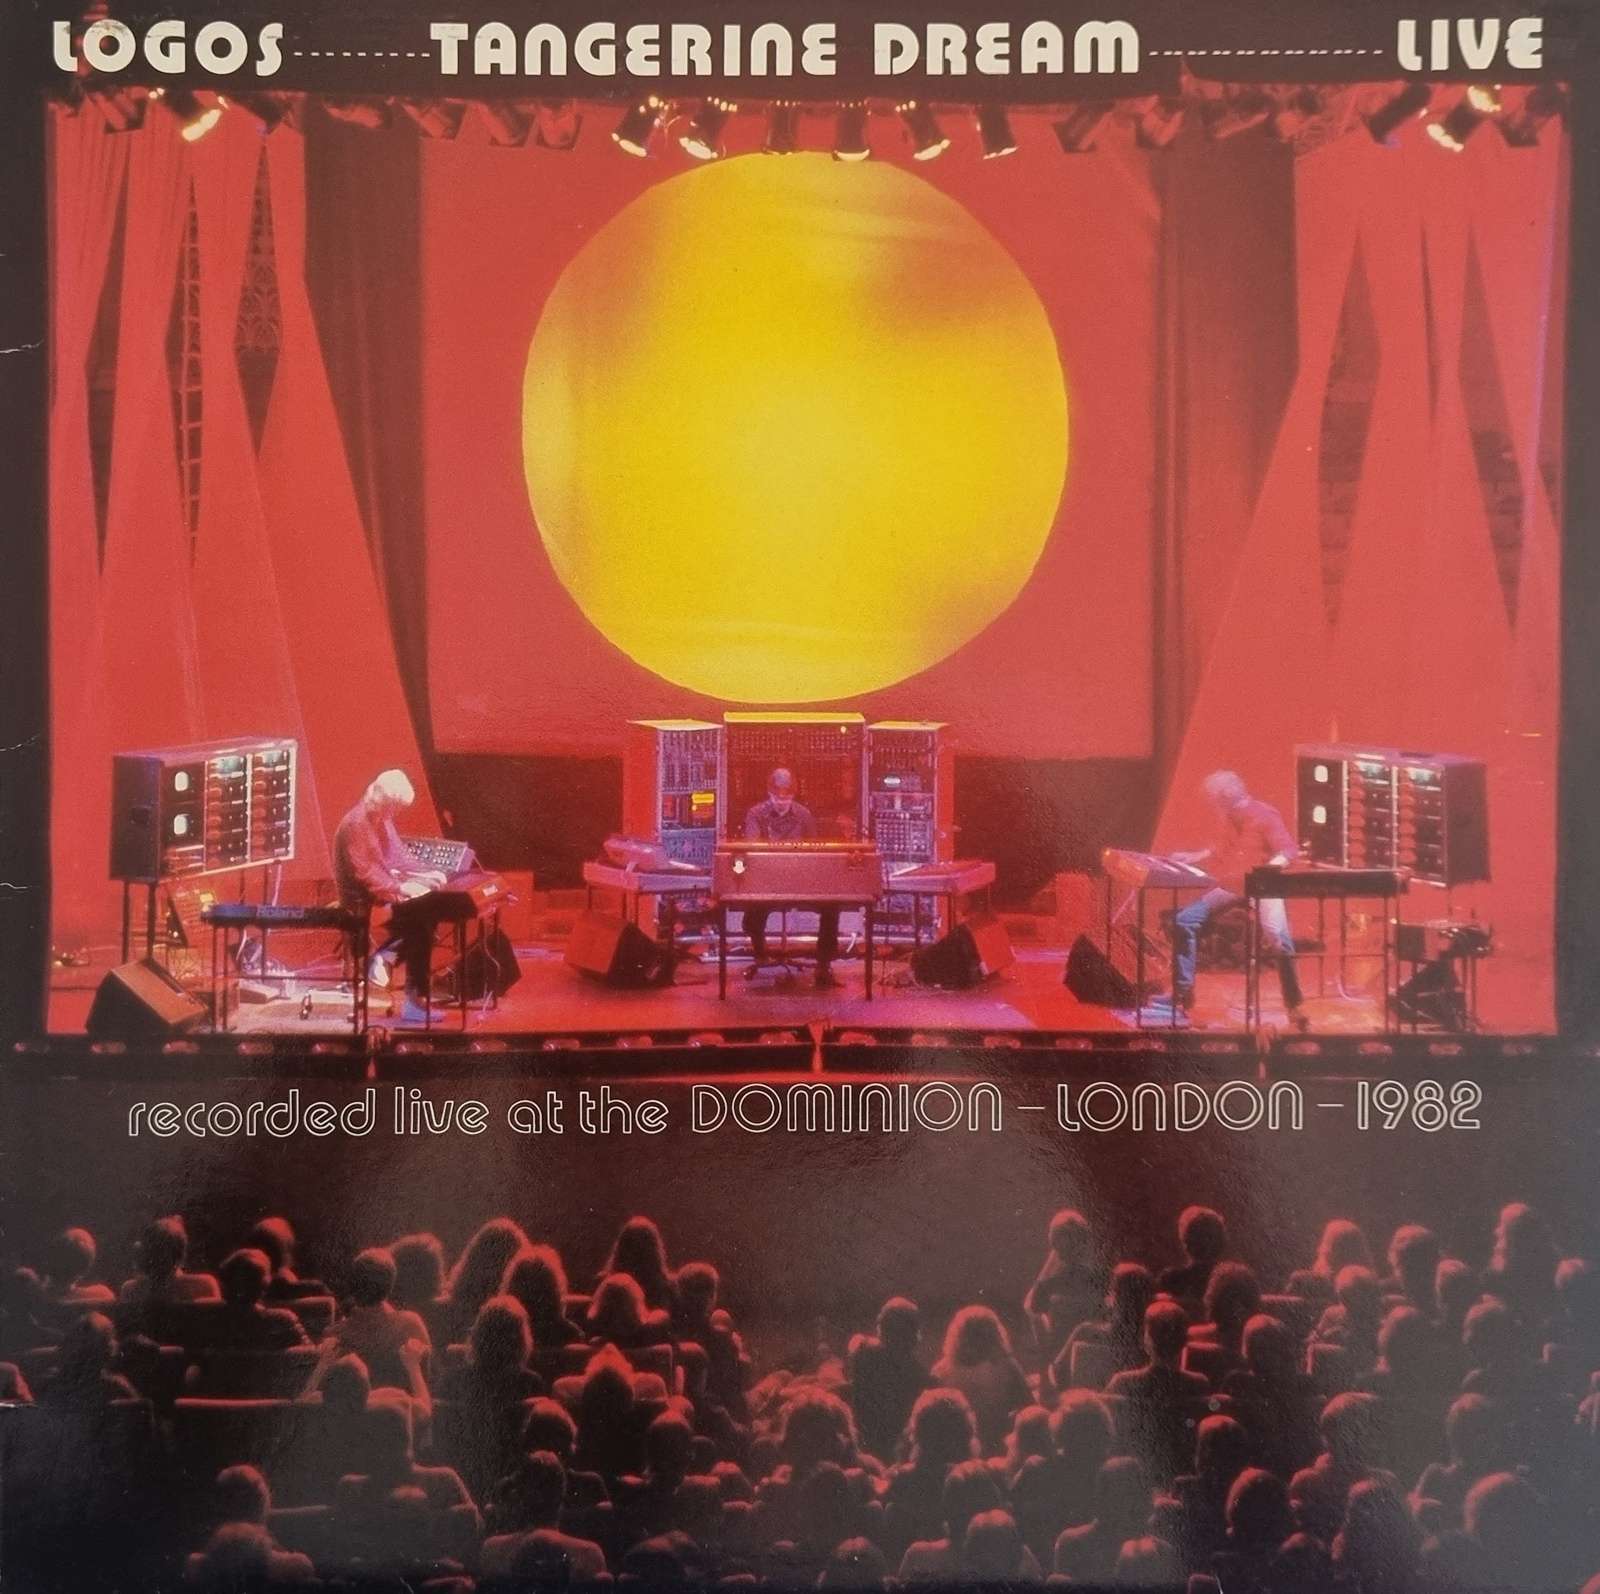 Tangerine Dream Live - Logos (LP)